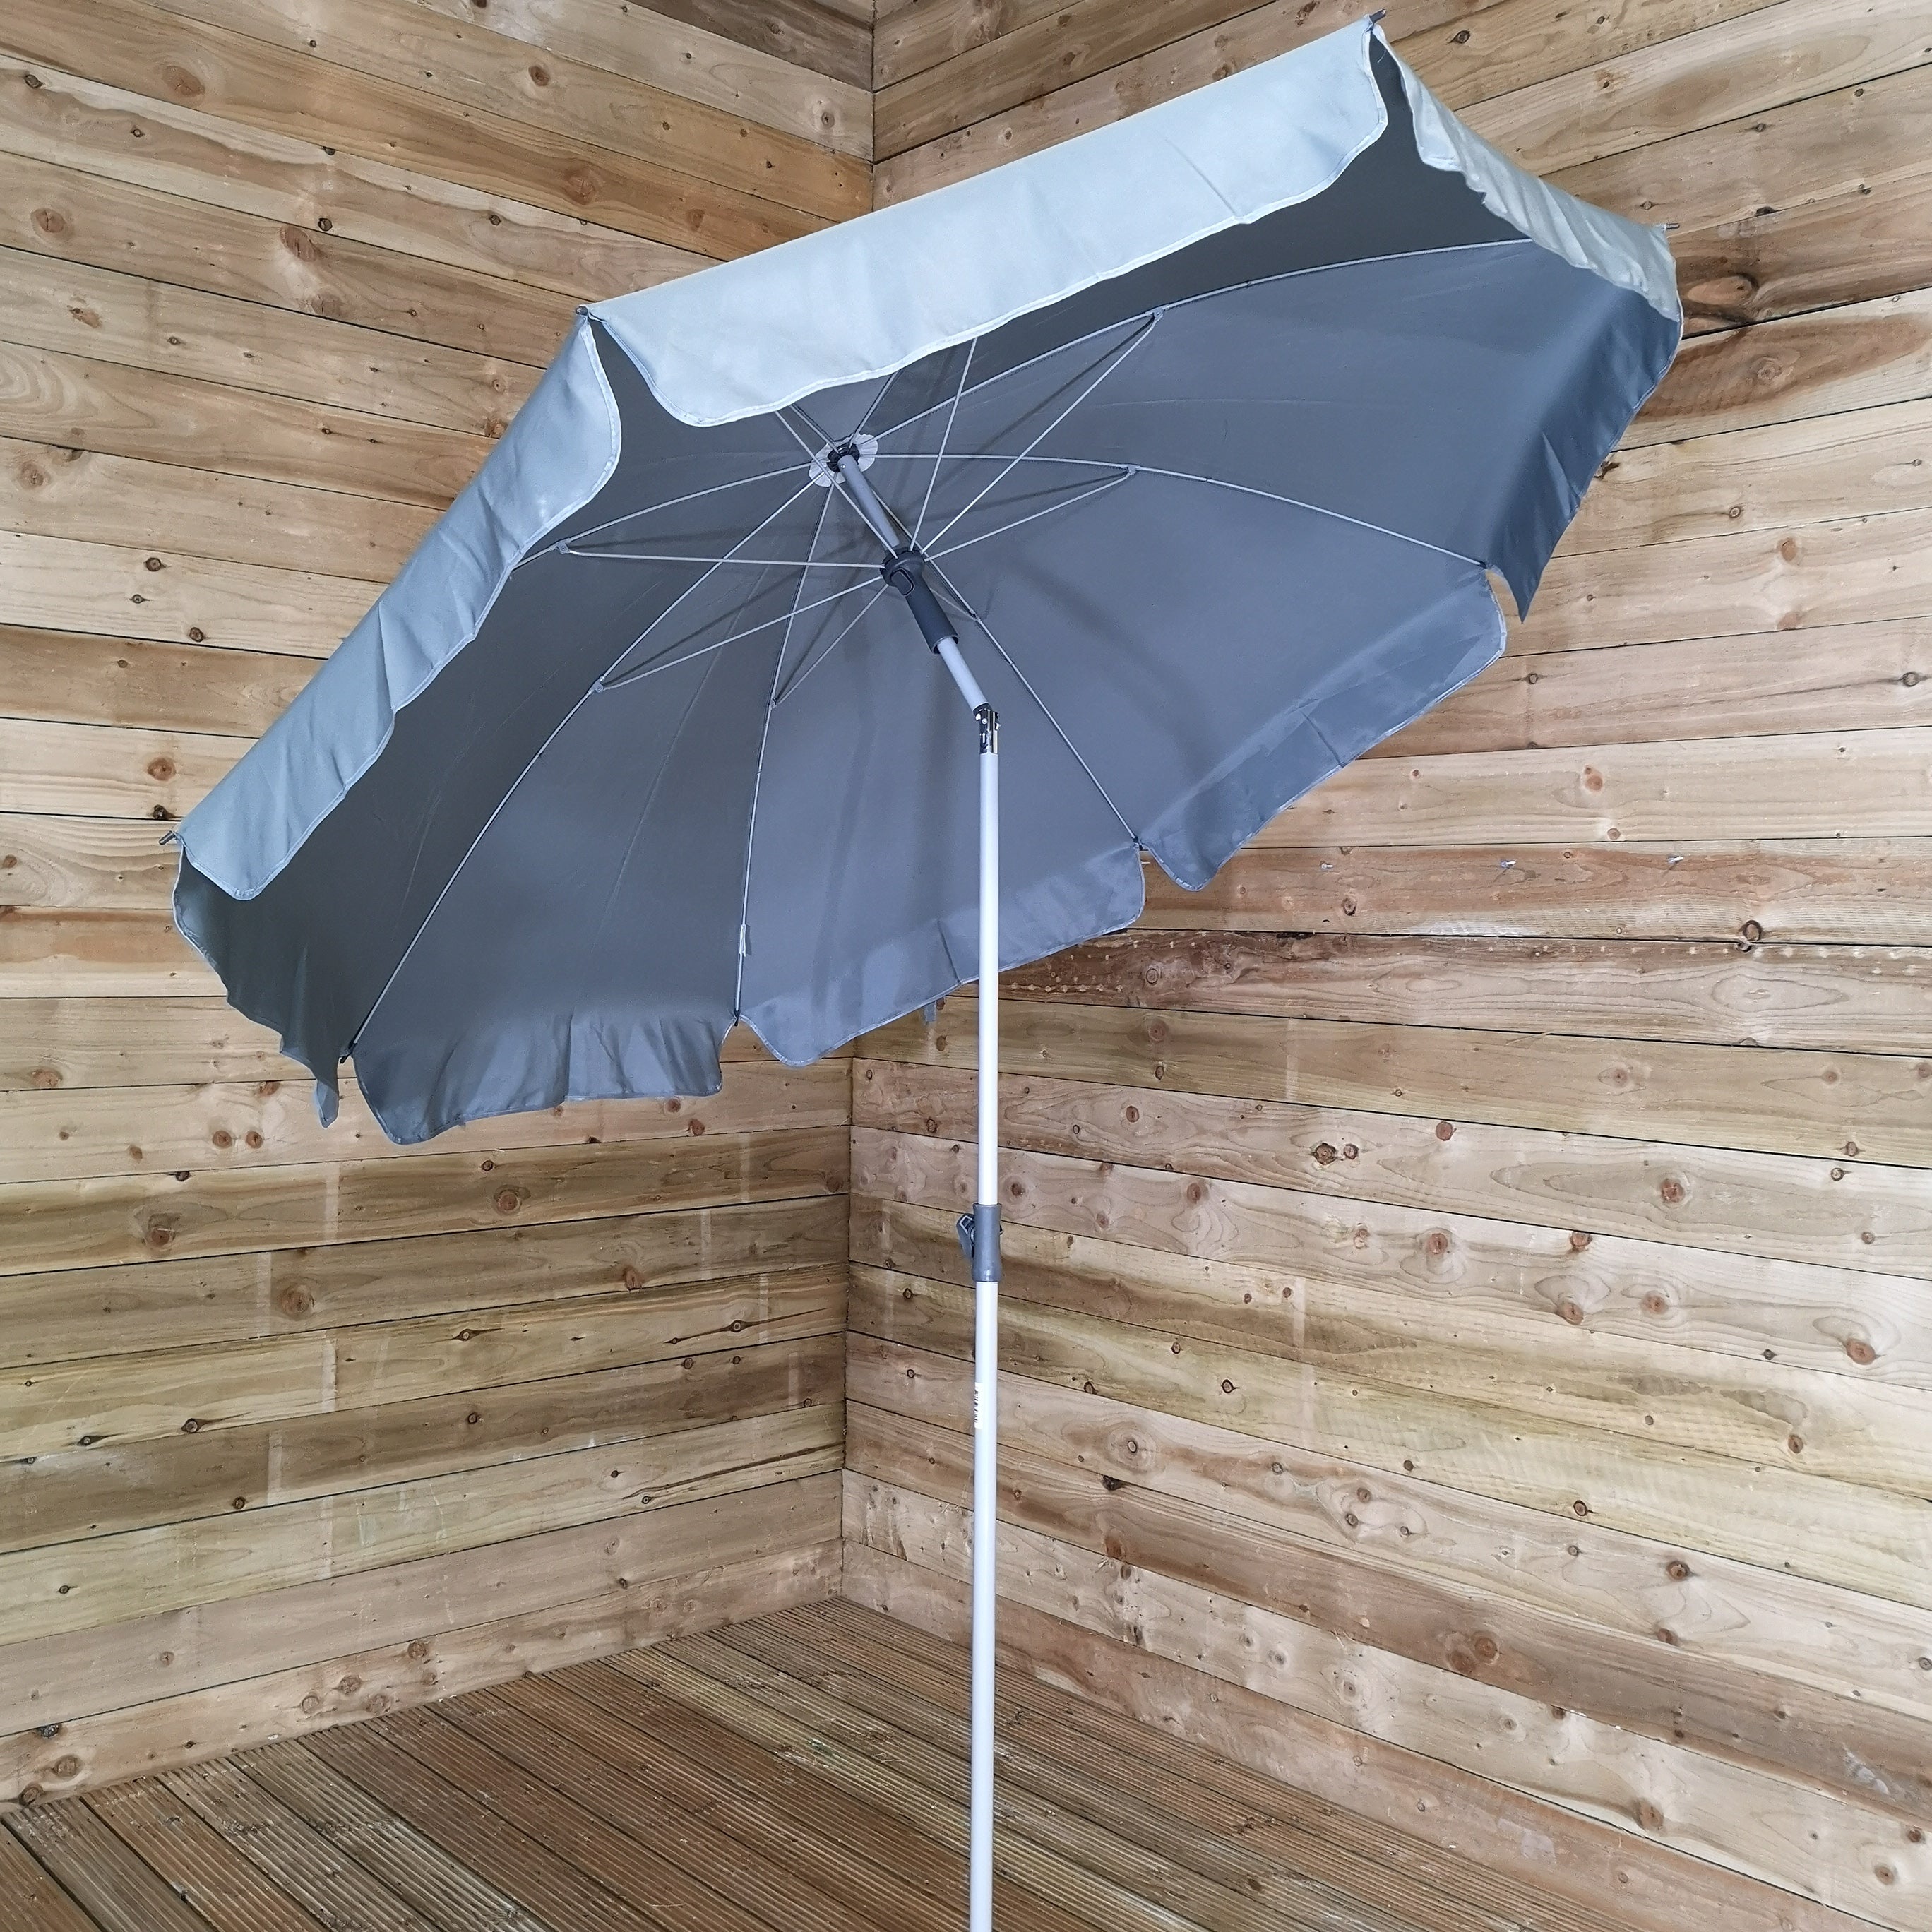 200cm Umbrella with Tilt Action in Grey for Garden or Patio – Cheaper Online